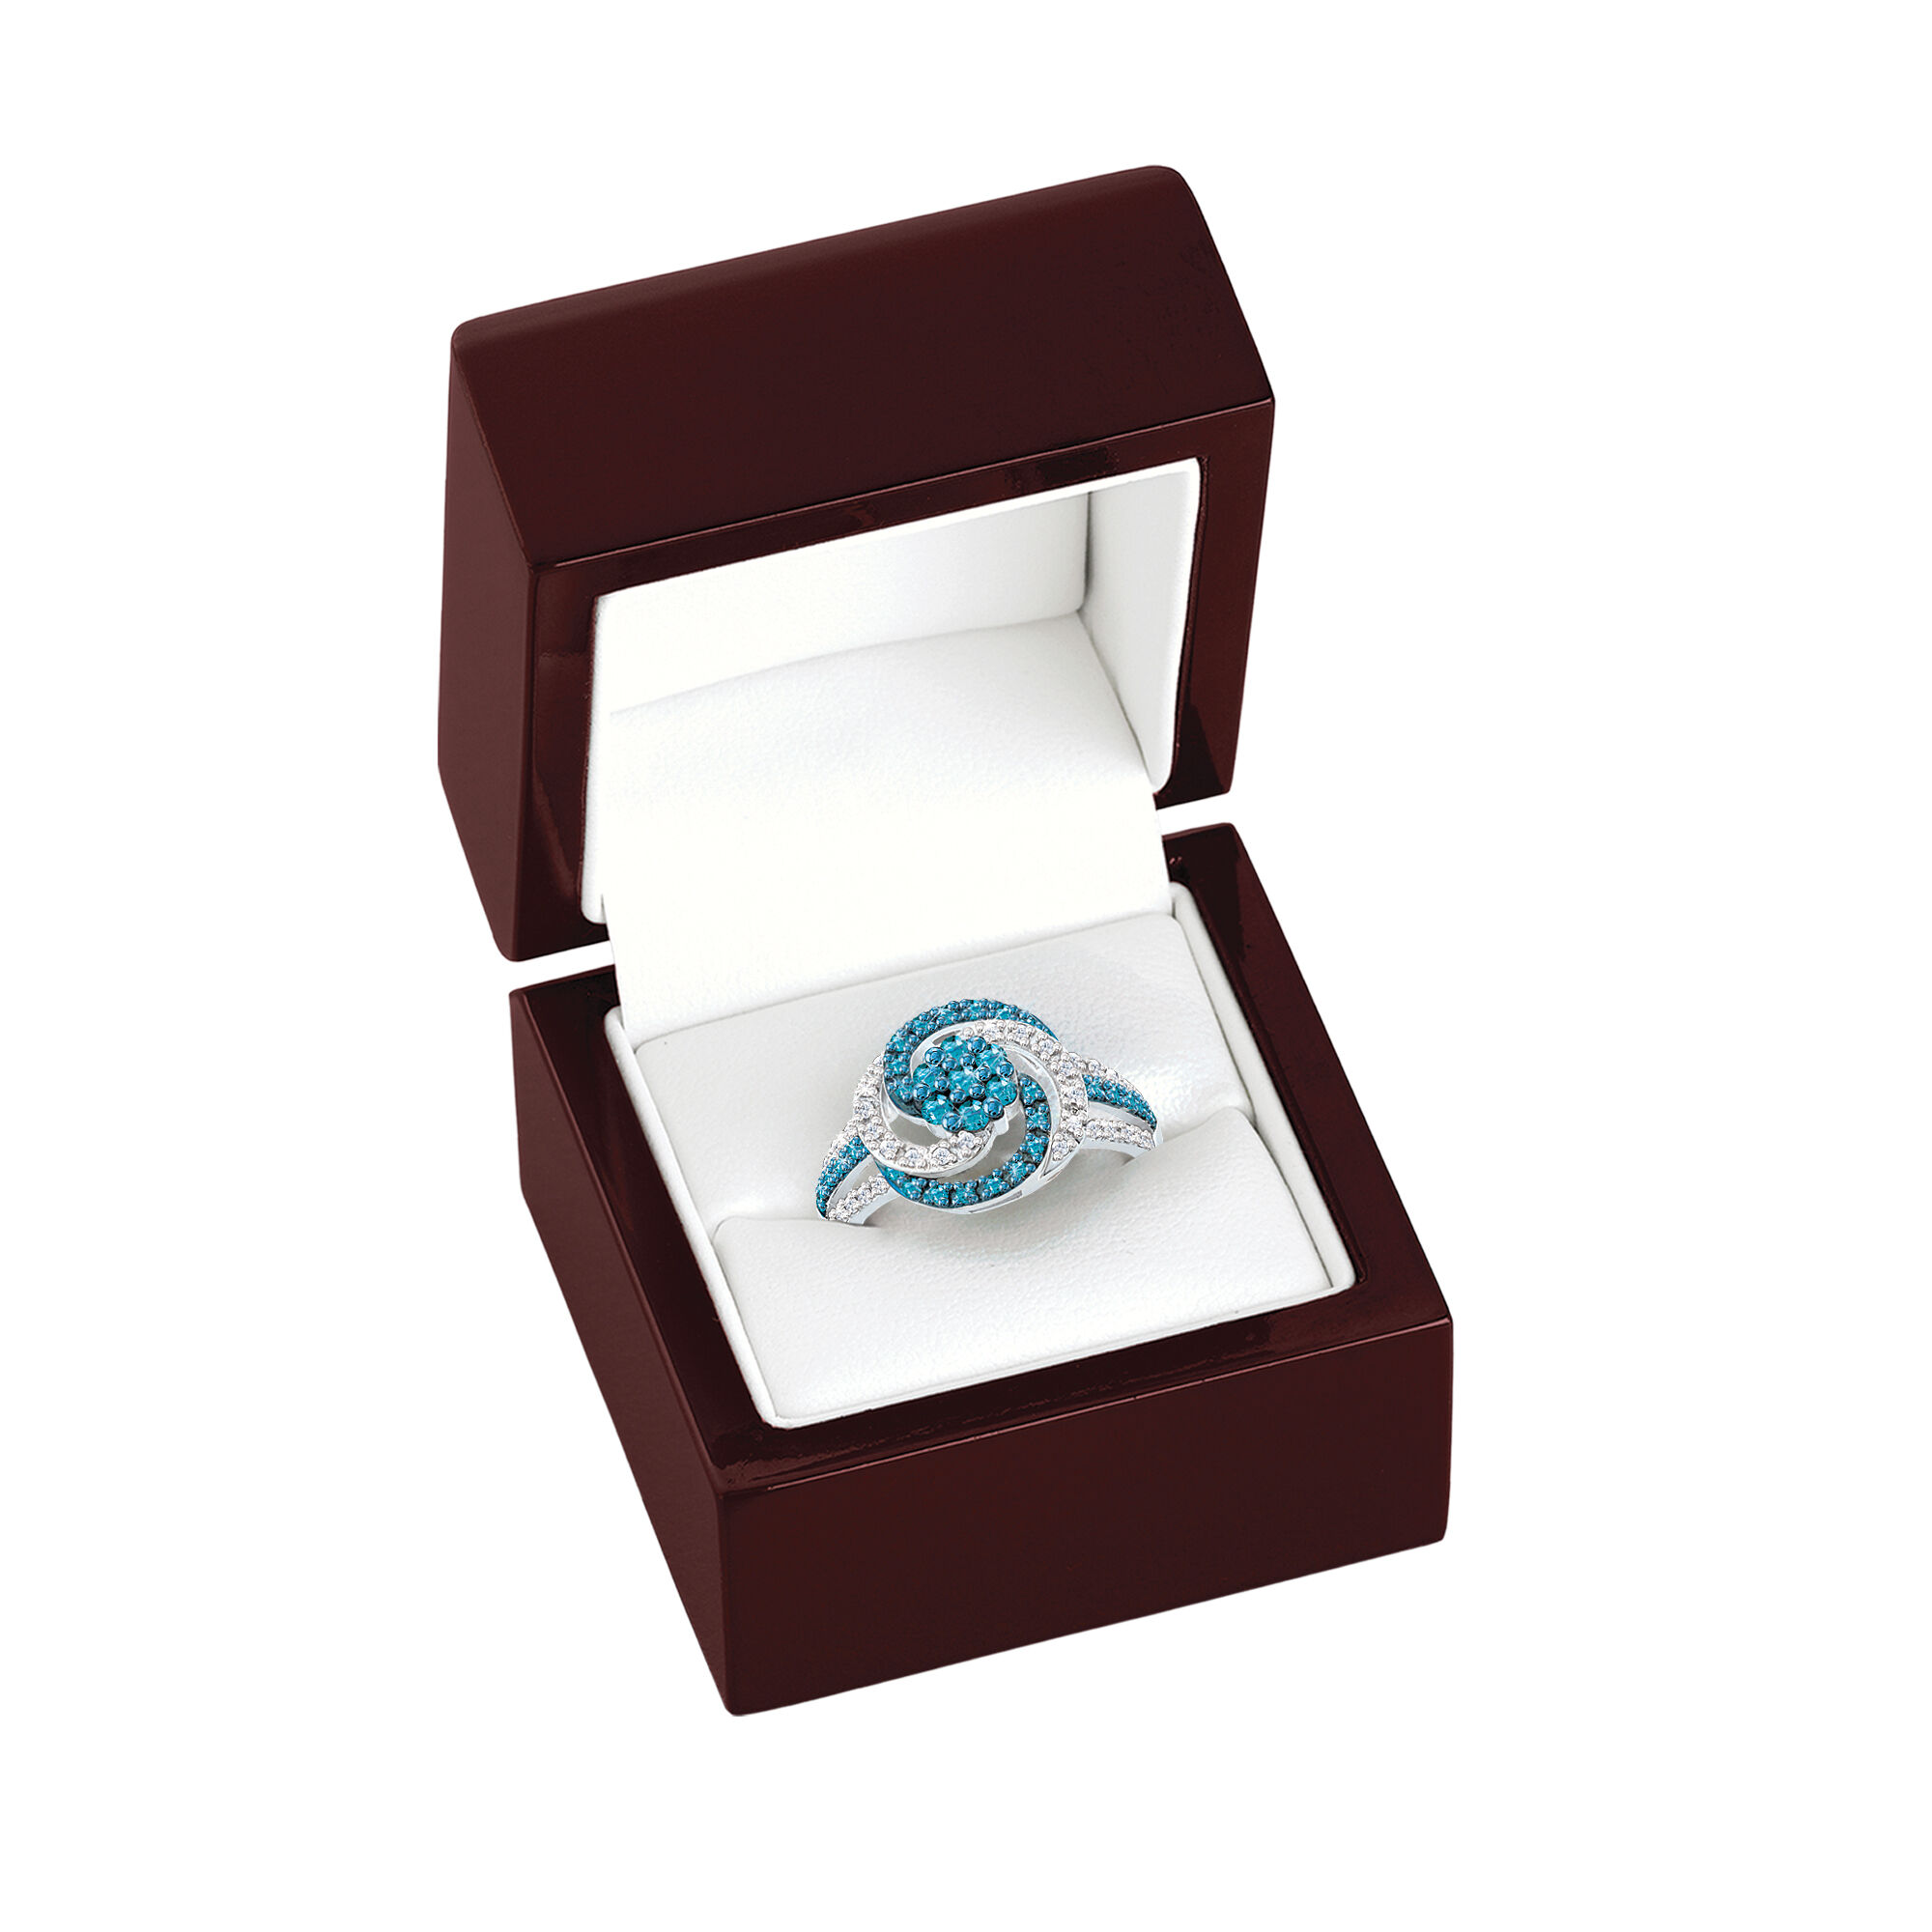 Simply Stunning Blue White Diamond Ring 6533 0011 g gift box